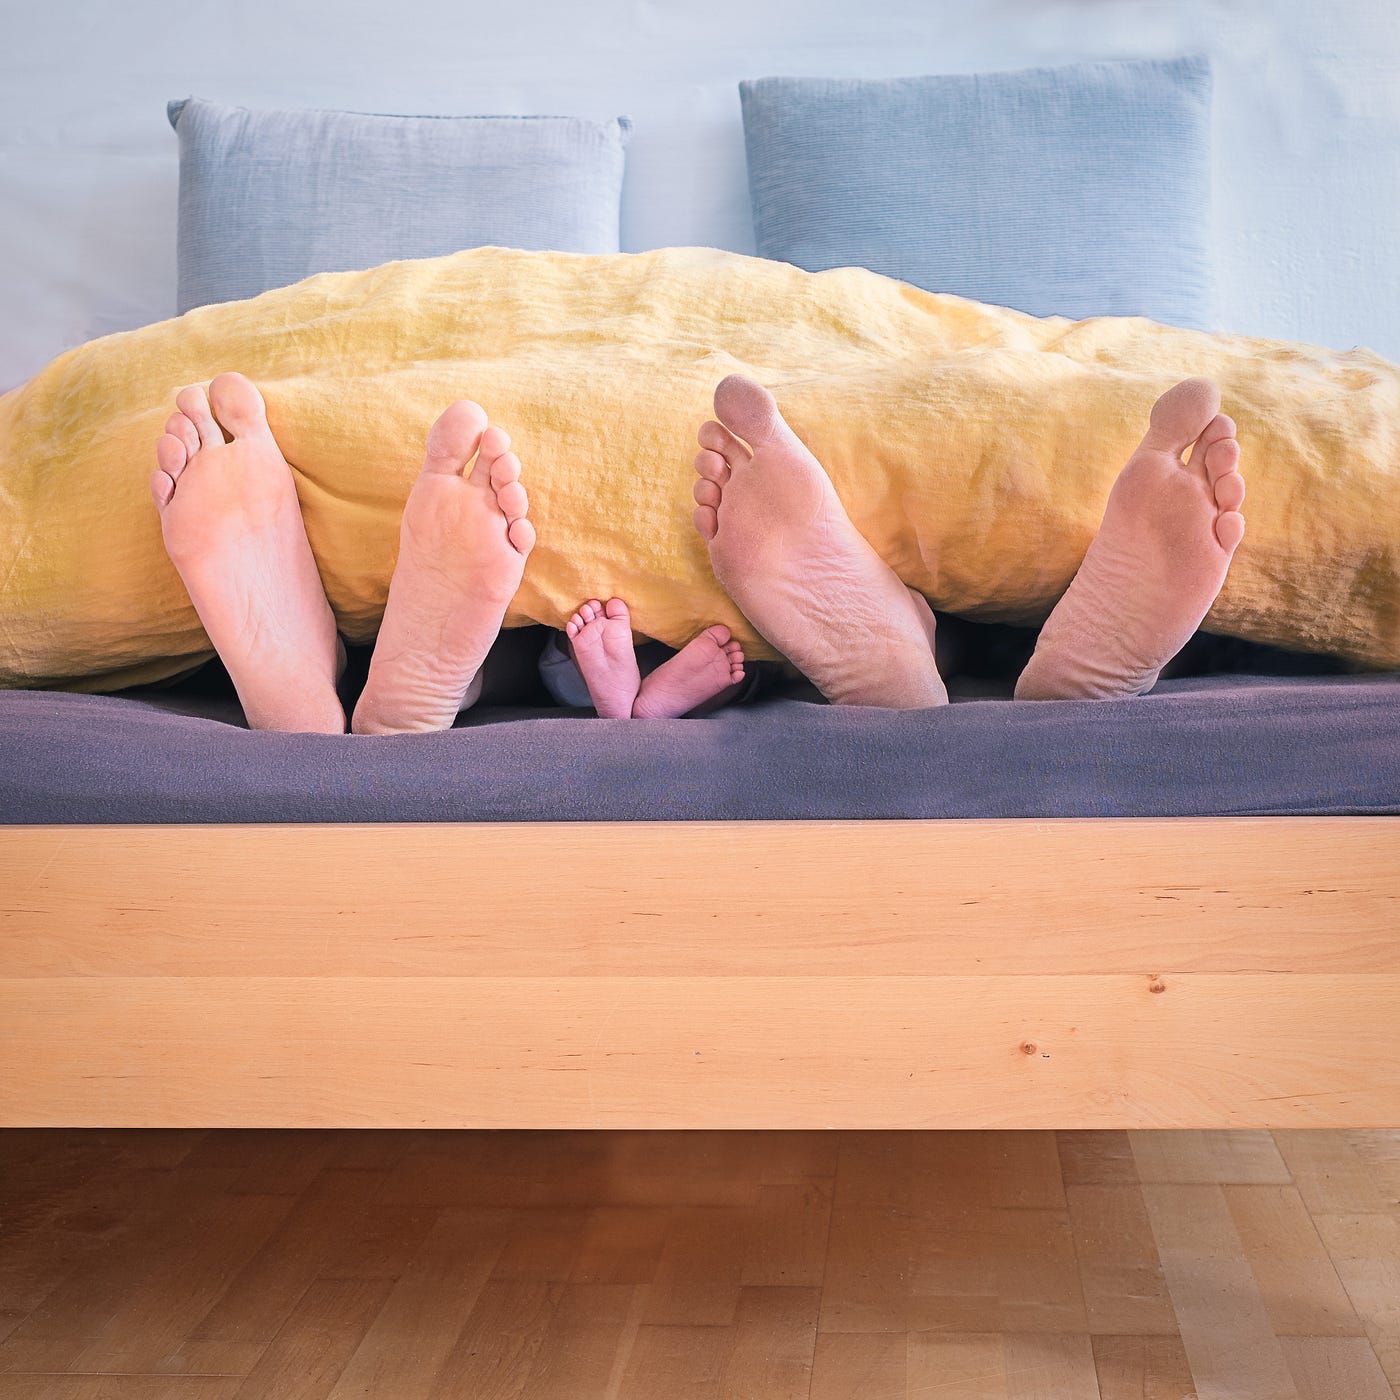 DO WE SLEEP BETTER WITH SOCKS OR BAREFOOT? SHOULD YOU WEAR SOCKS TO BED? |  by Dr. Alexander Zeuke | Dr.Alexander Zeuke | Medium